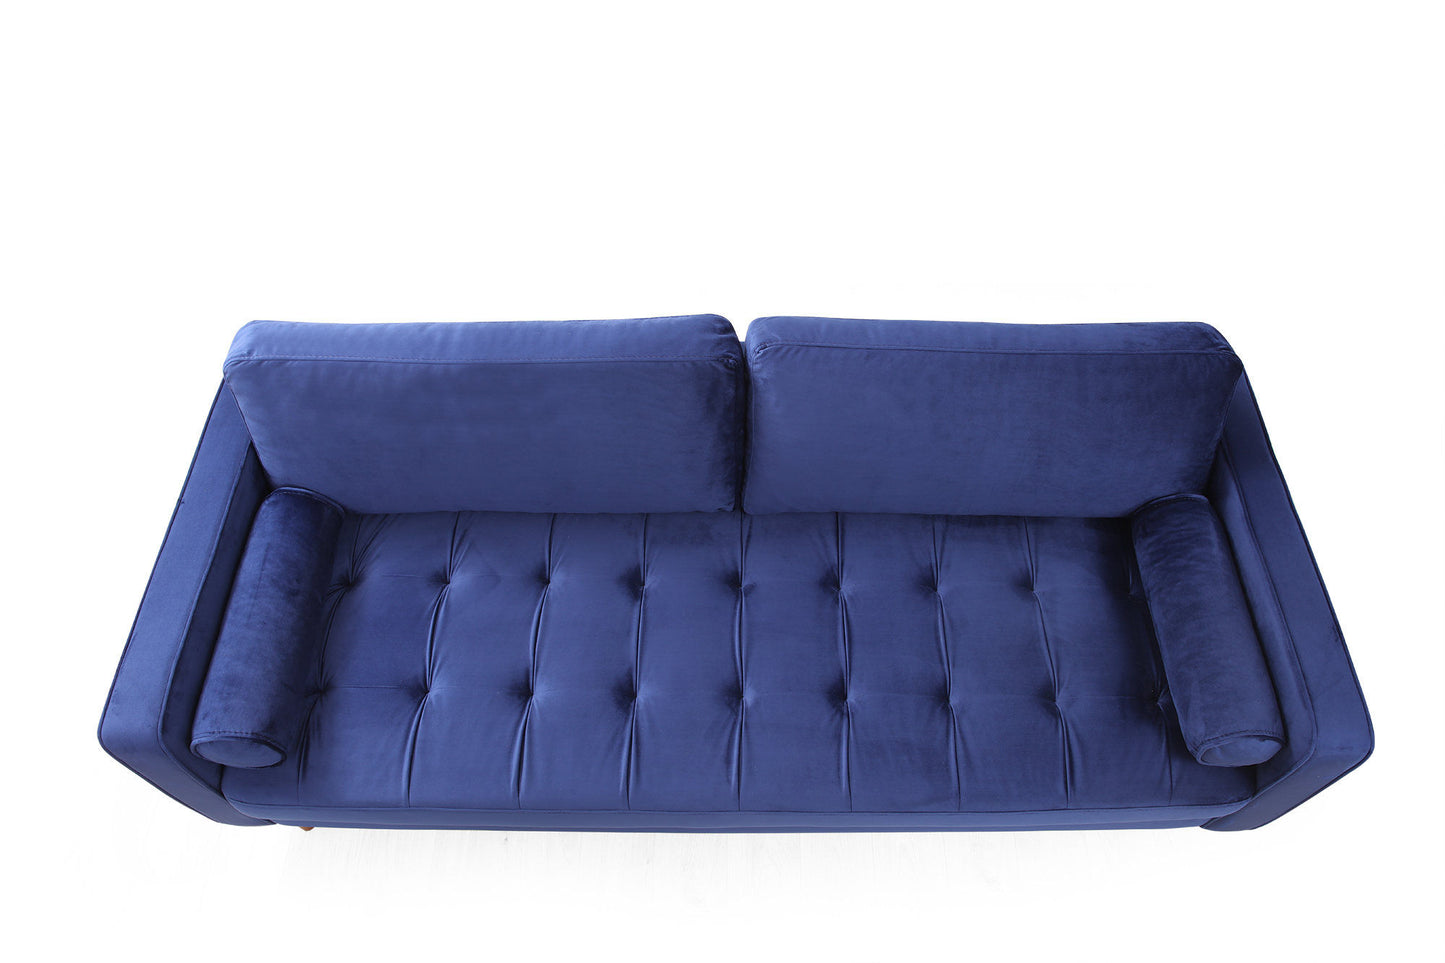 Rom - Marineblå - 3-sæders sofa